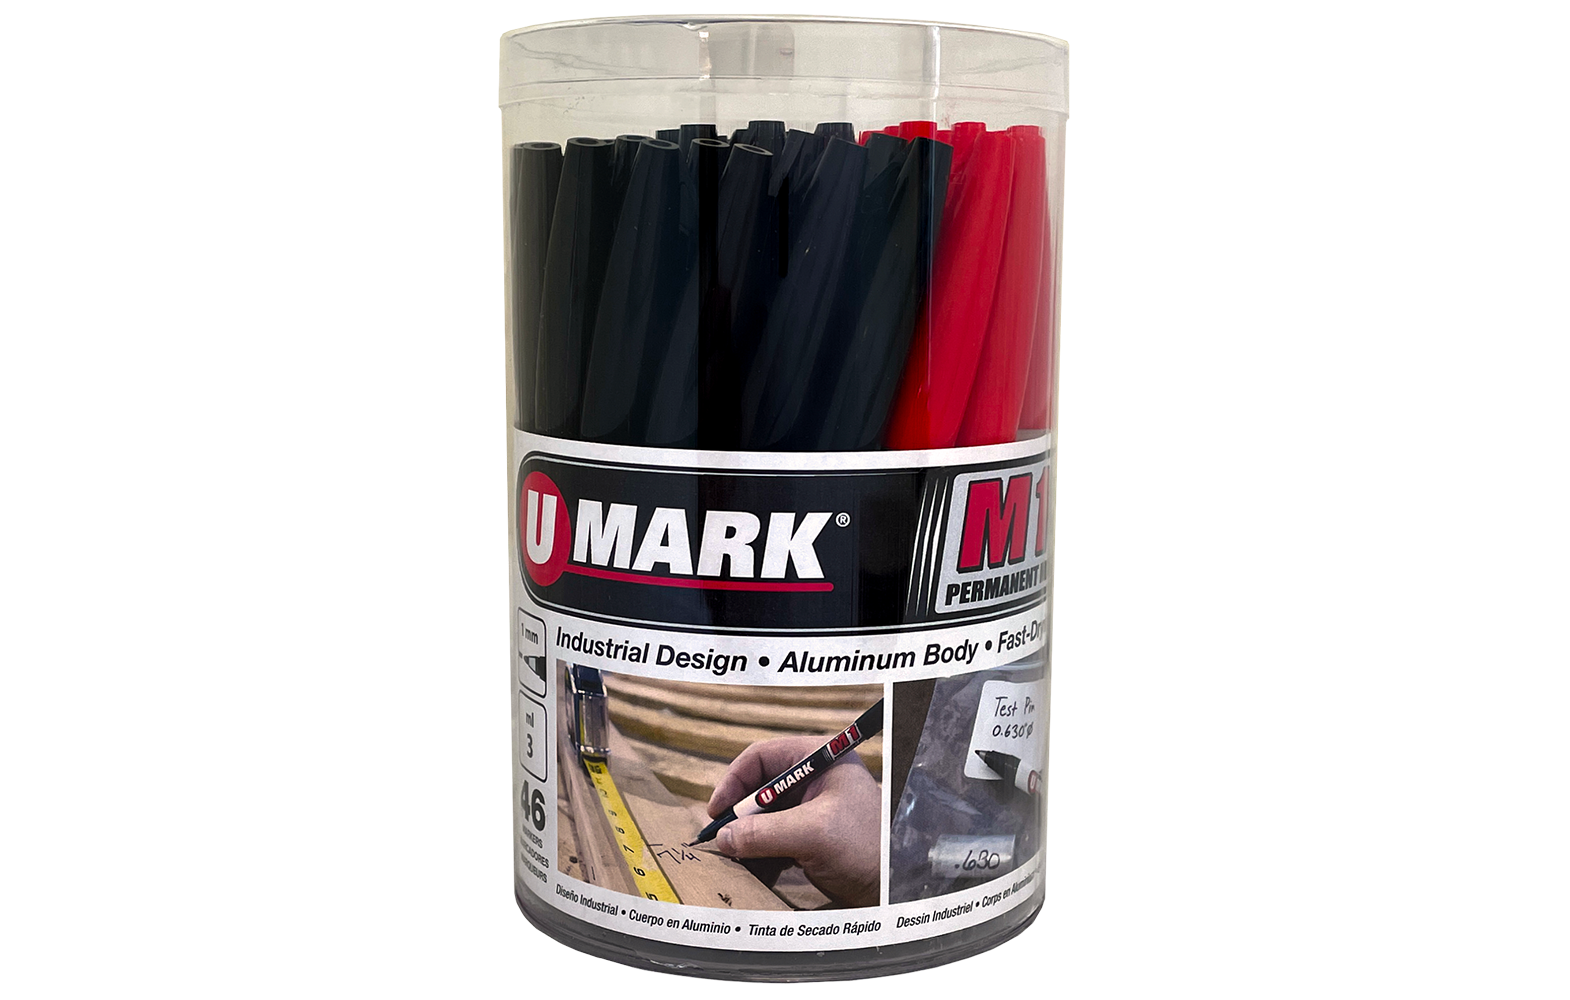 https://www.umarkers.com/Umark-Files/Product-Images/Ink-Marker-Images/M1-Images/M1-Package/M1_Bucket_1570x1000.jpg